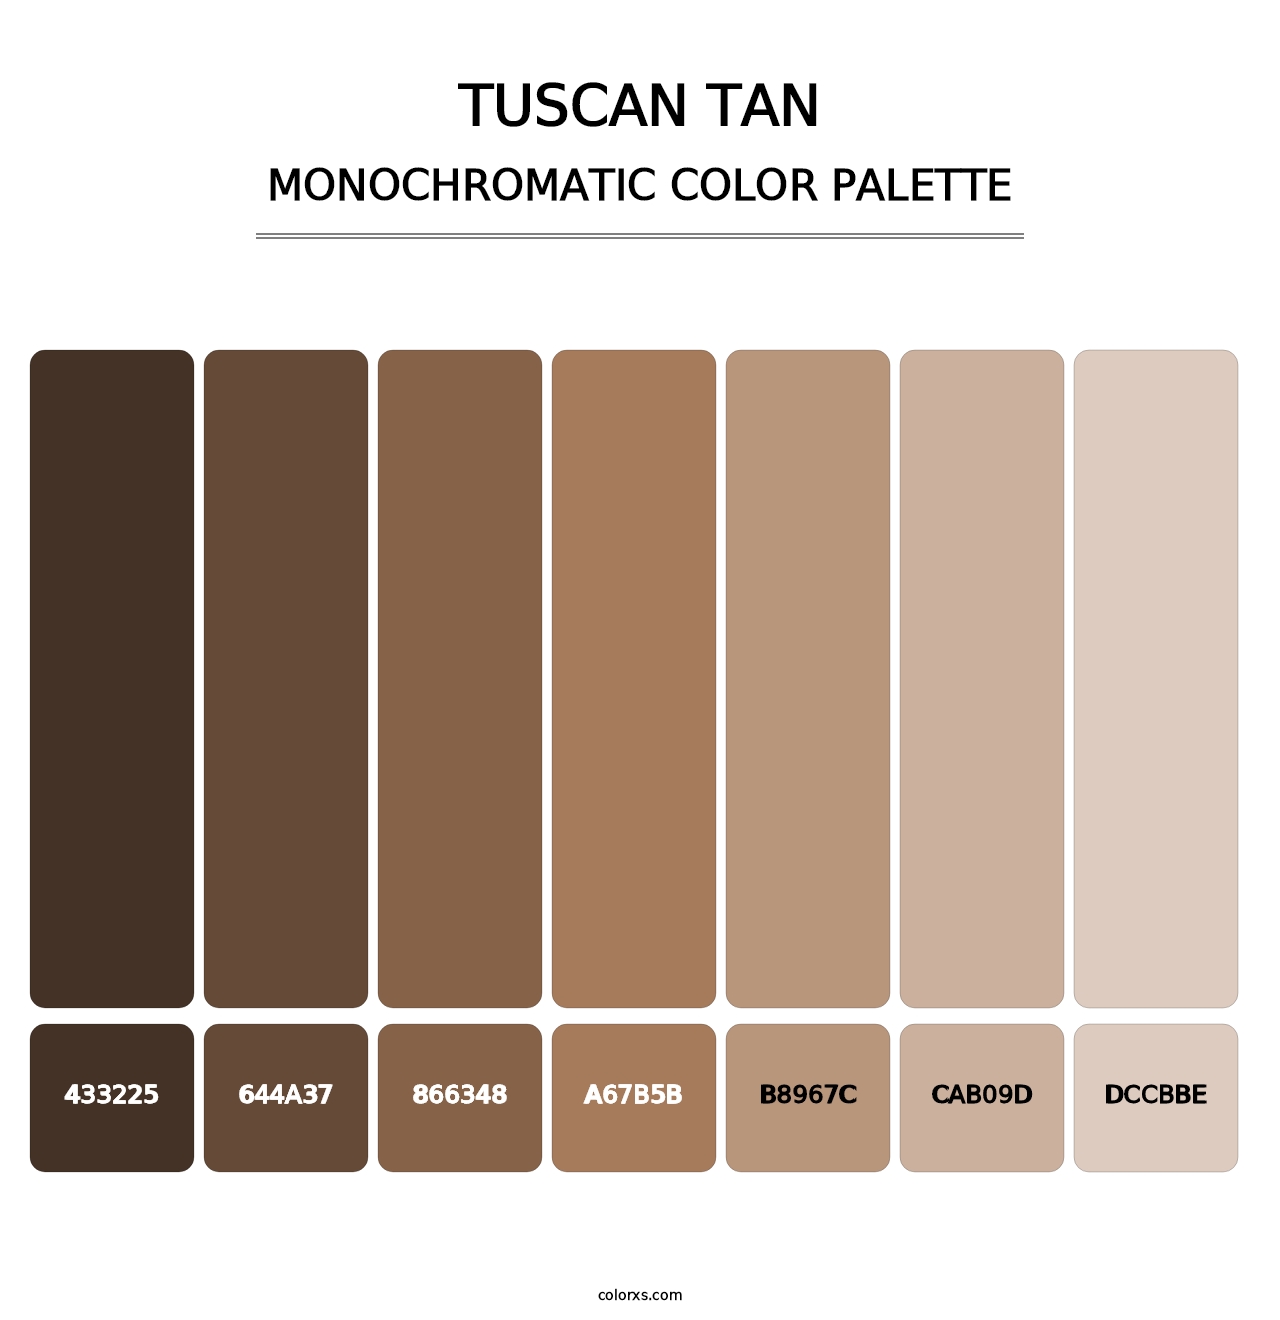 Tuscan Tan - Monochromatic Color Palette